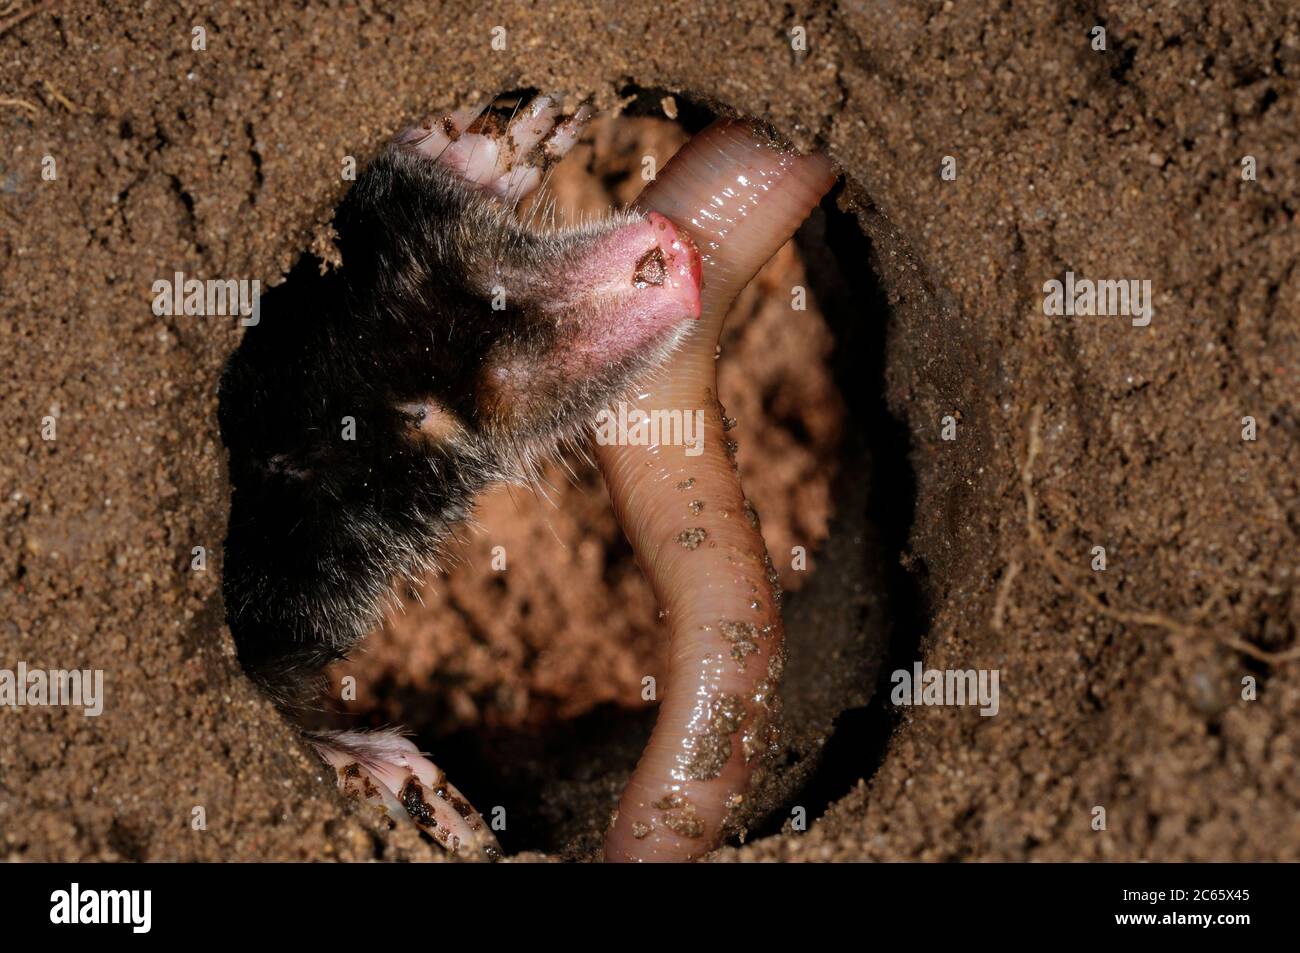 European Mole (Talpa europaea) has caught a worm in its subterranean burrow, Kiel, Germany Stock Photo